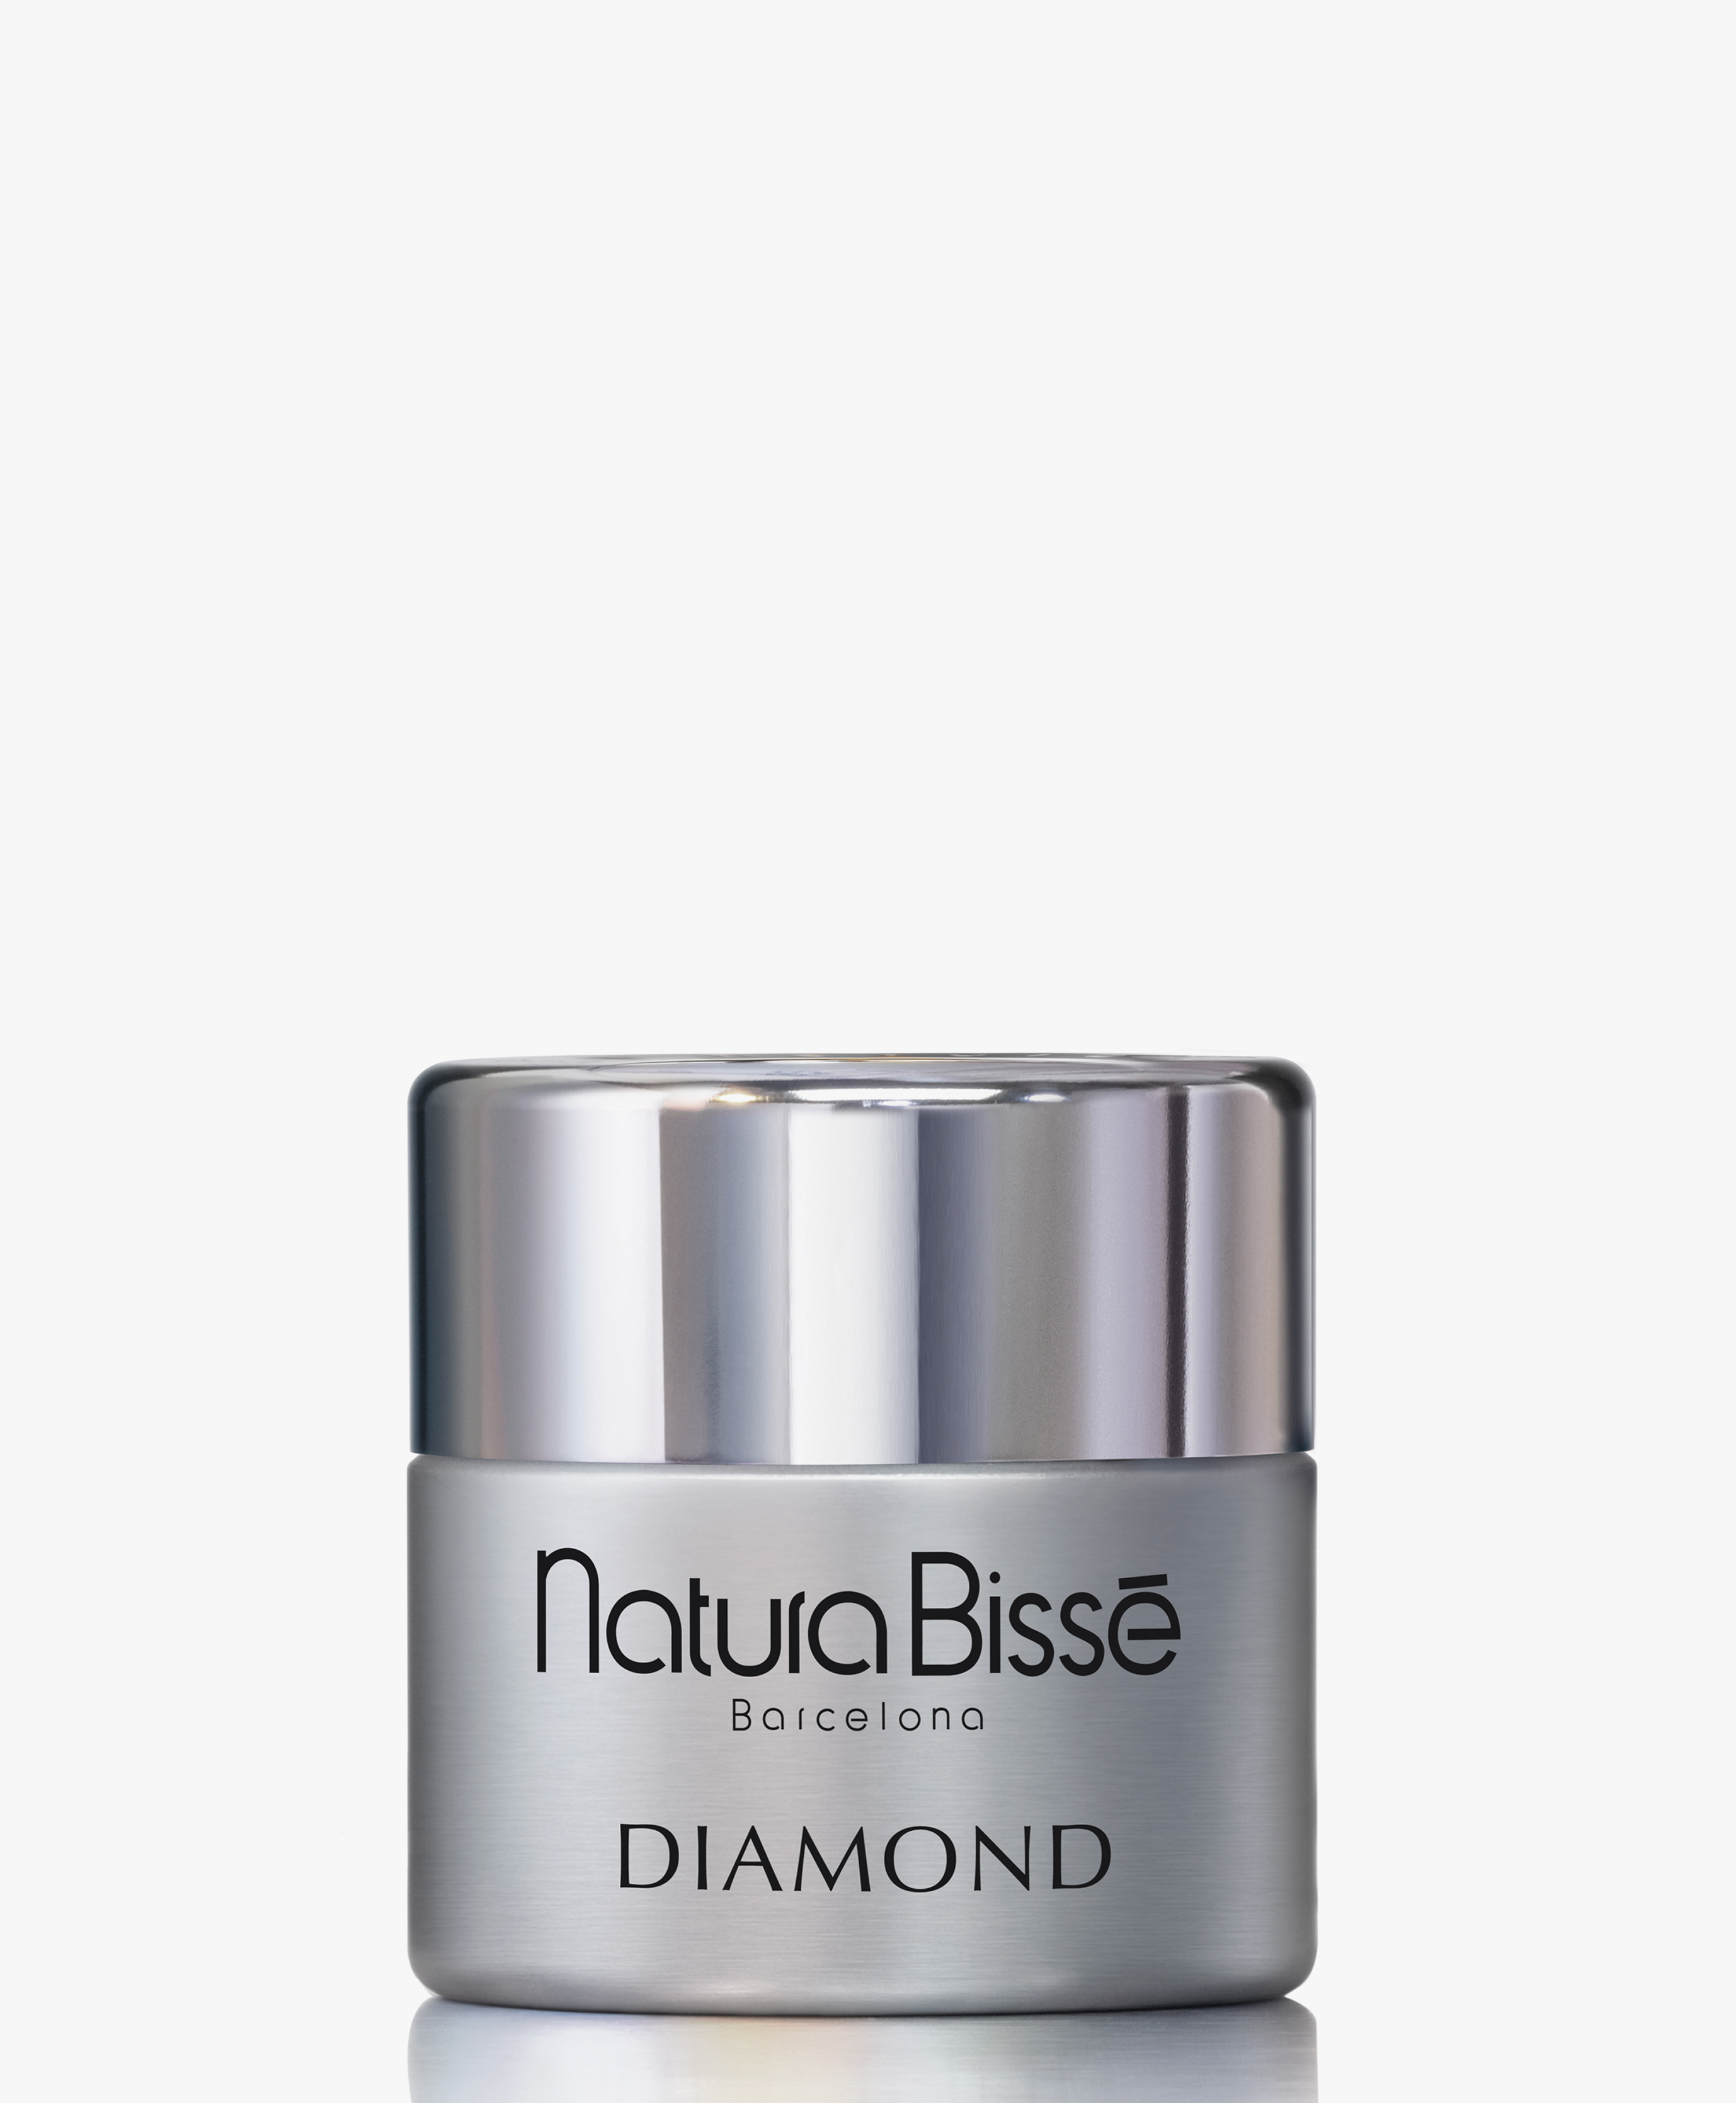 Natura Bissé Diamond Day and Night Cream - 31a160 diamond 50ml